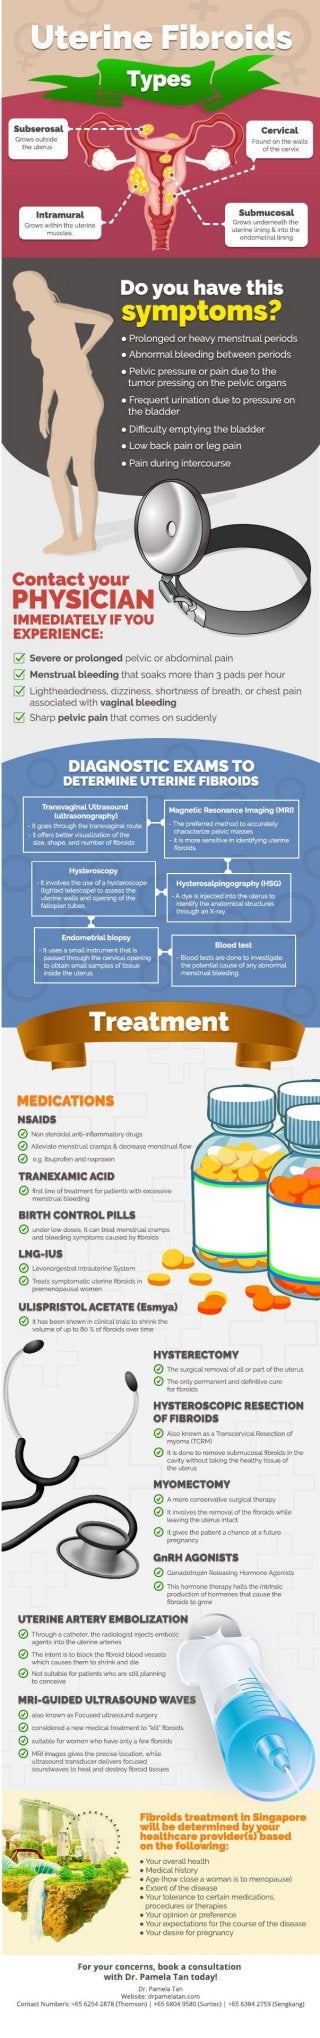 Uterine Fibroids Types, Symptoms & Treatments (Infographic)